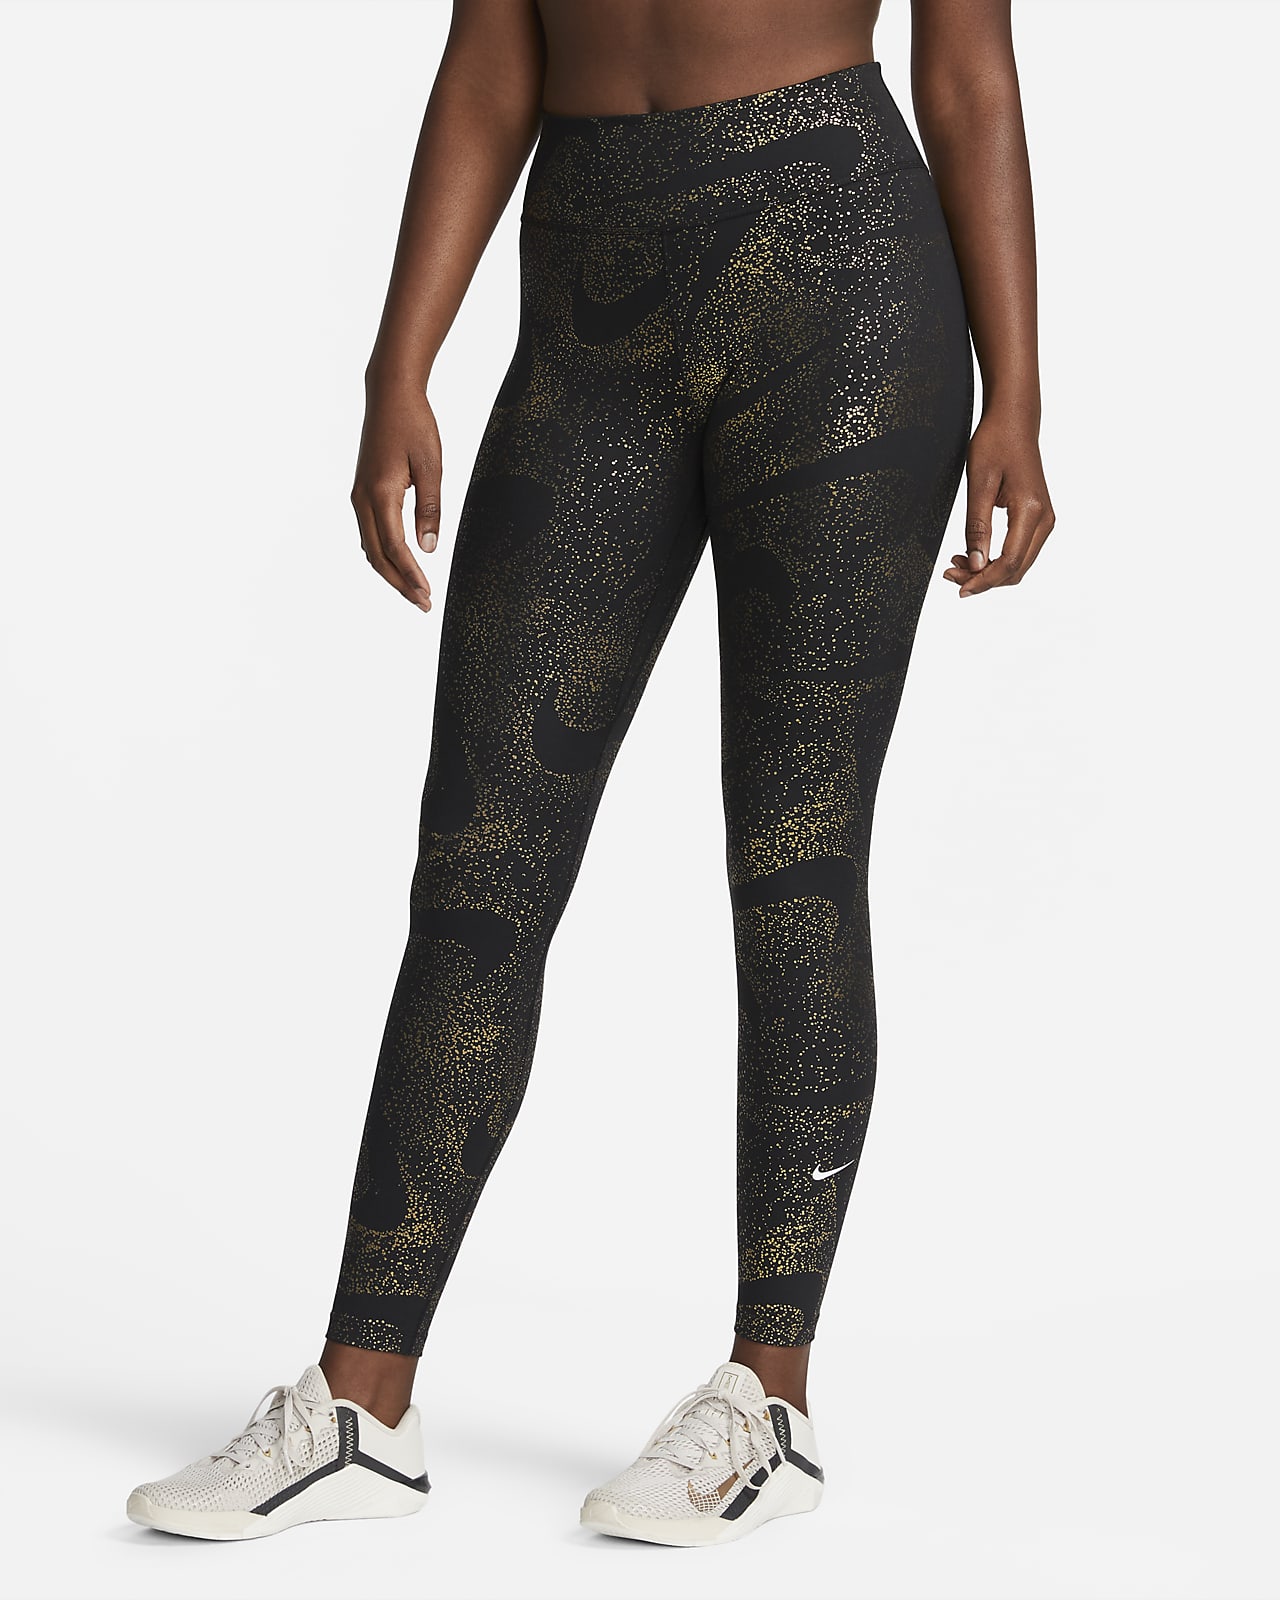 Nike One-leggings med print og mellemhøj talje til kvinder